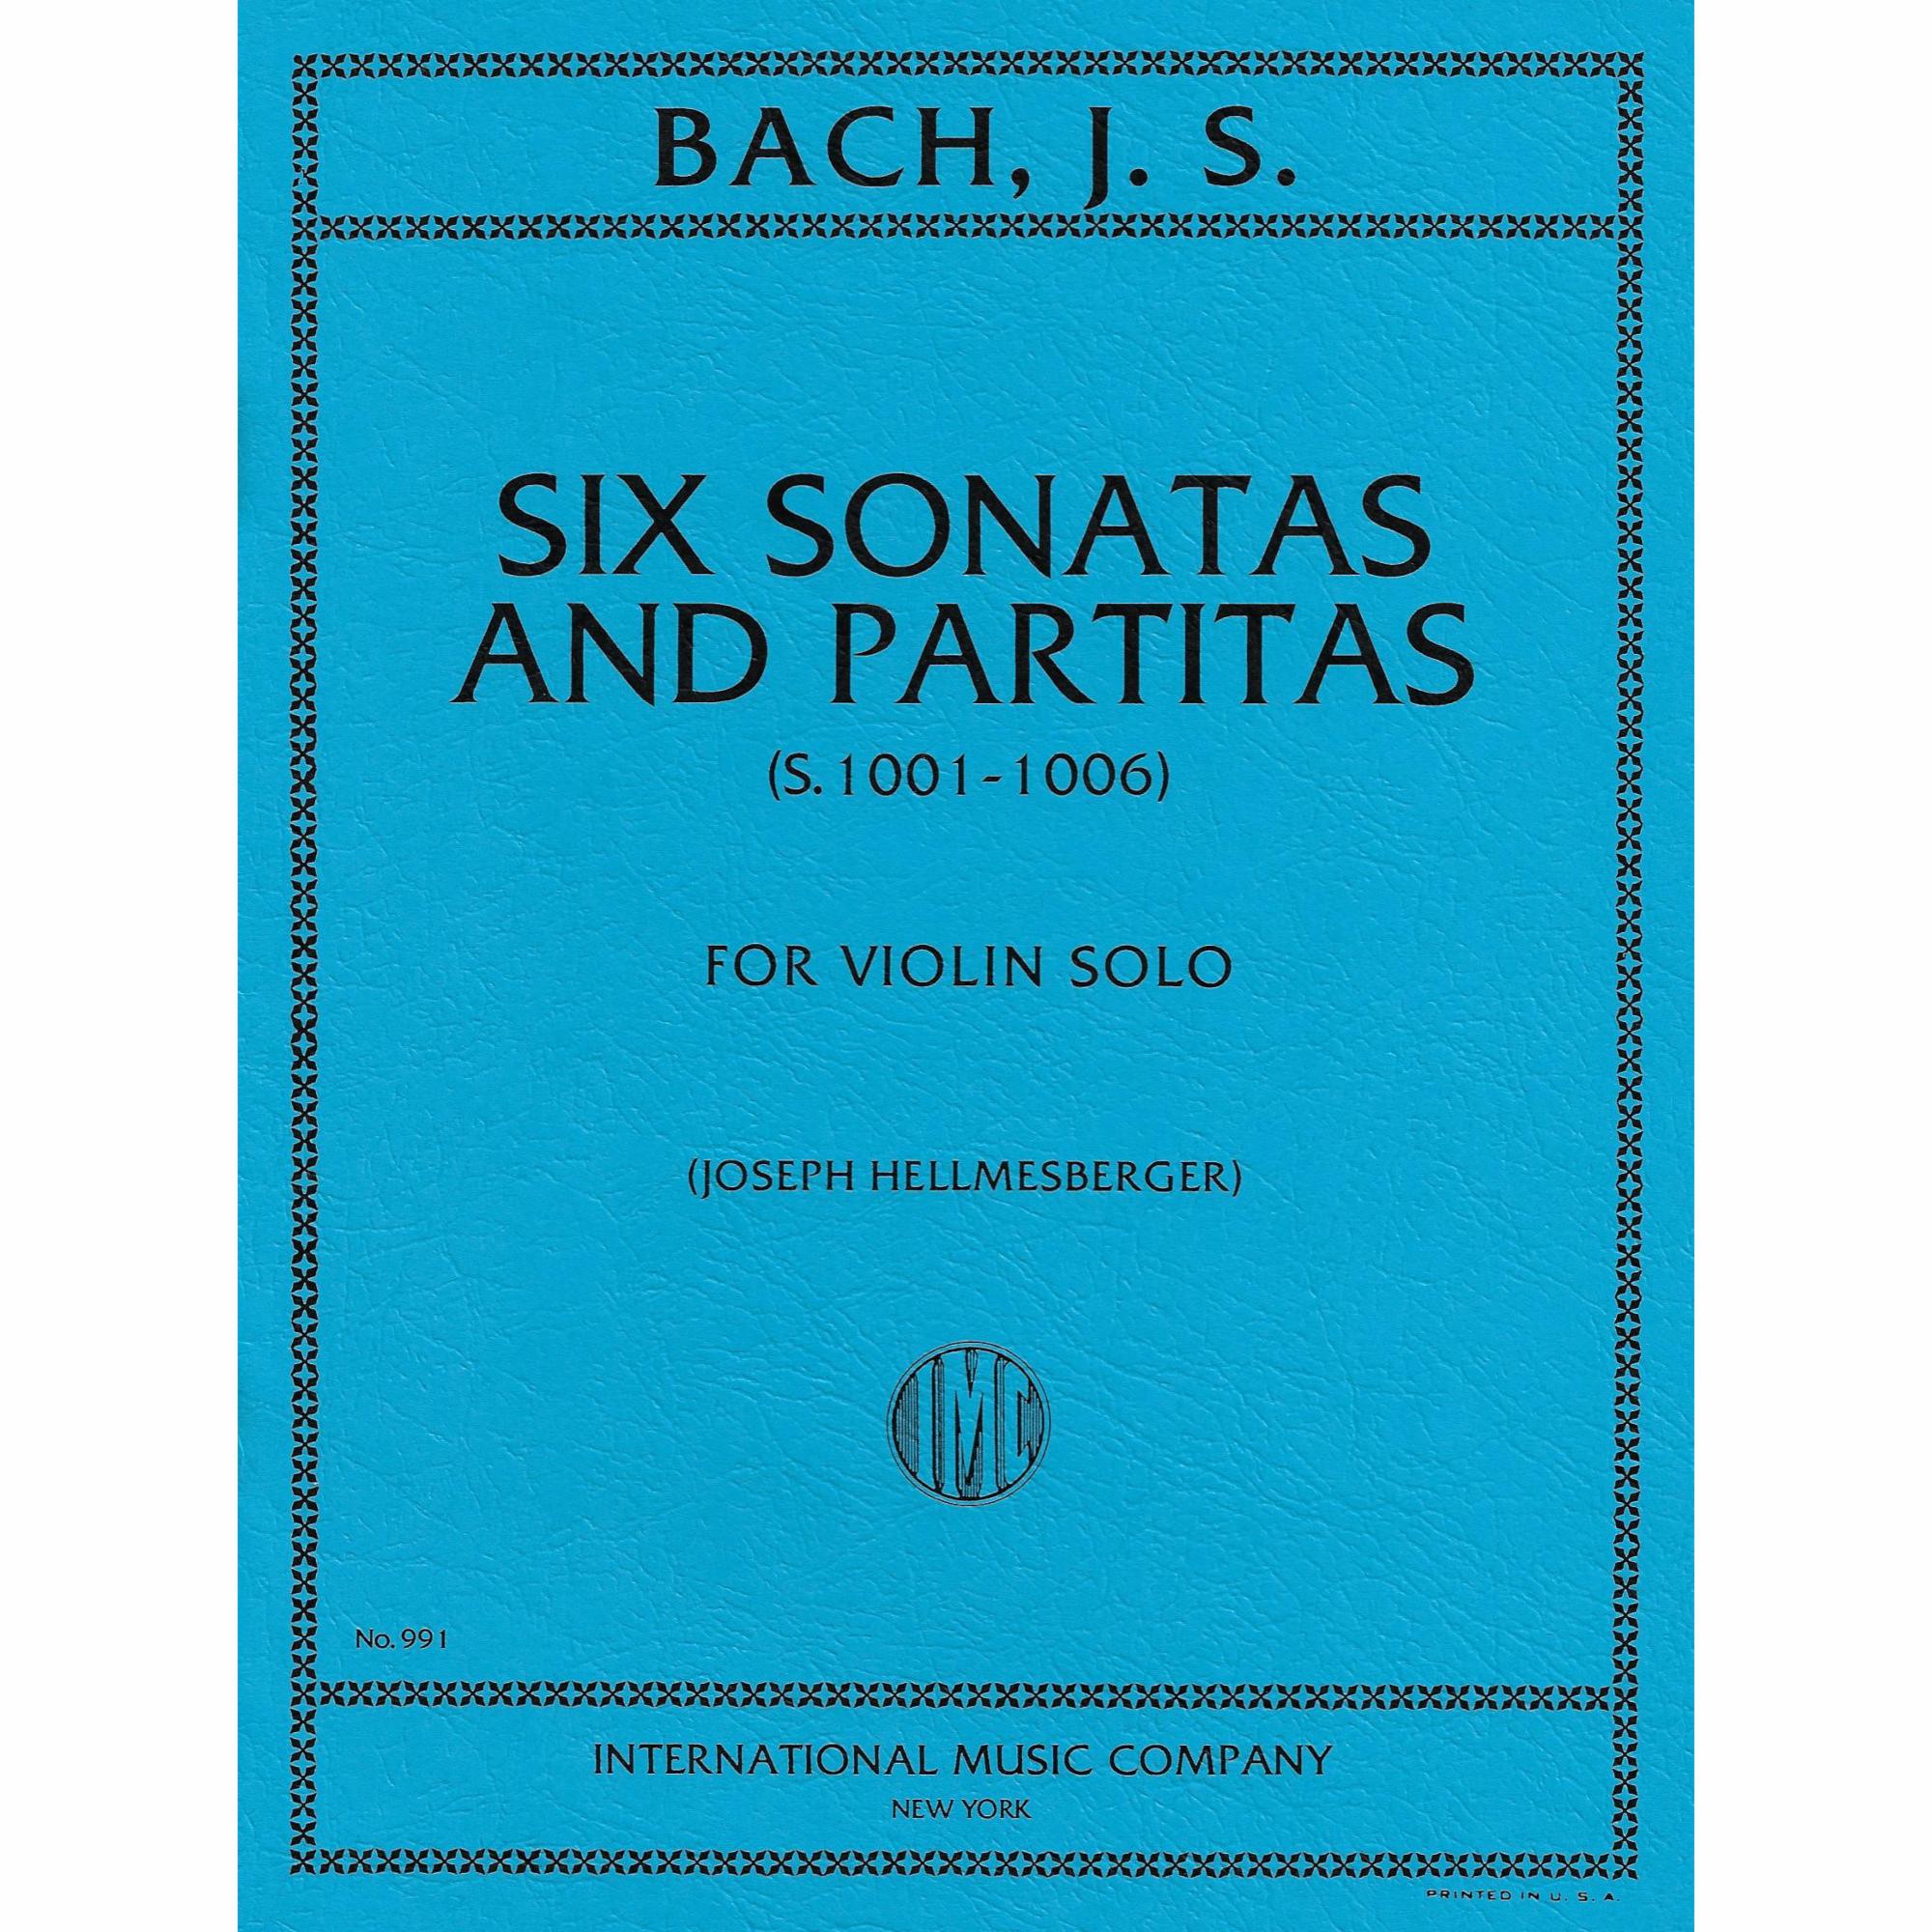 Bach -- Six Sonatas and Partitas, S. 1001-1006 for Solo Violin